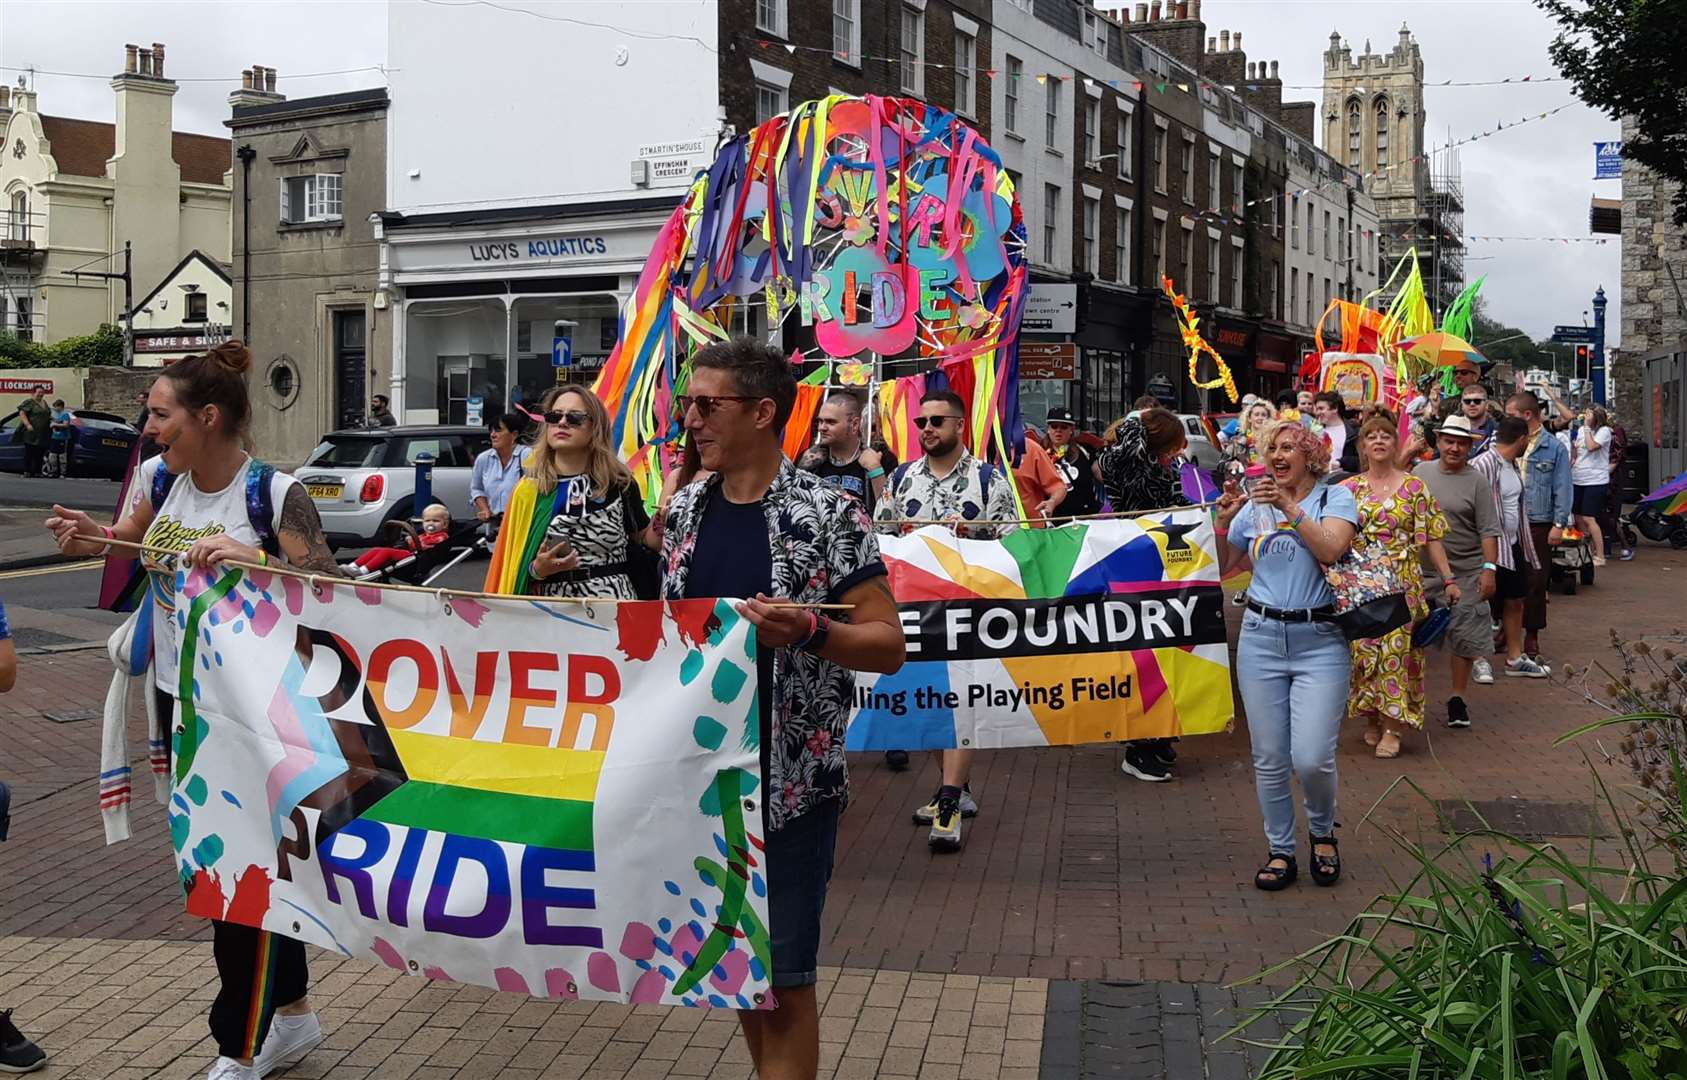 The Dover Pride march last August. Picture: Sam Lennon KMG